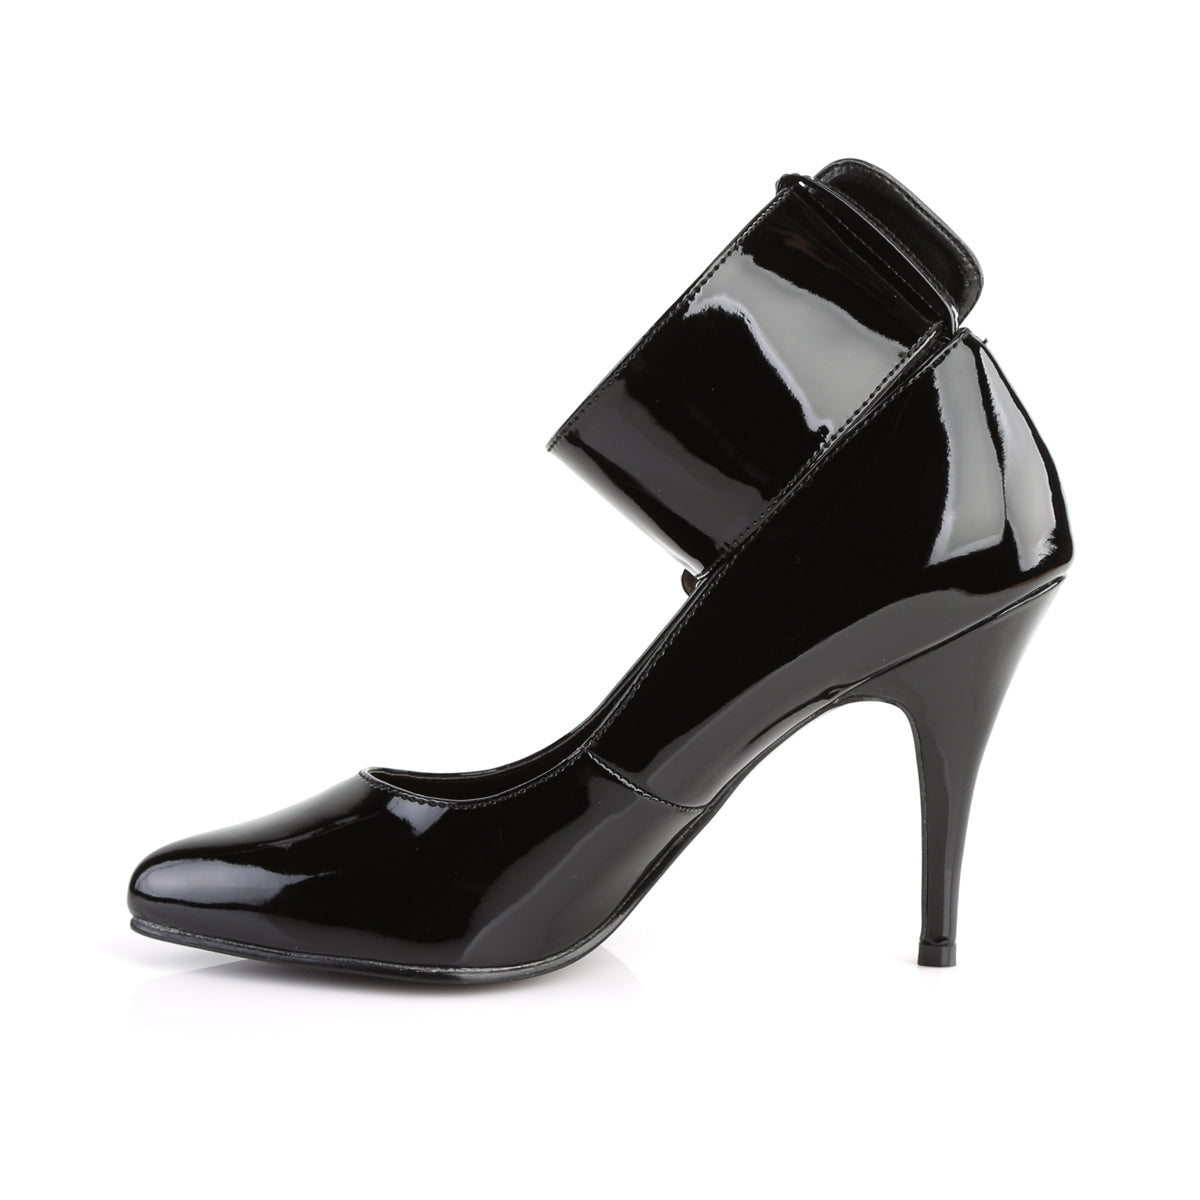 VANITY-434 Pleaser Shoe 4" Heel Black Patent Fetish Footwear-Pleaser- Sexy Shoes Pole Dance Heels